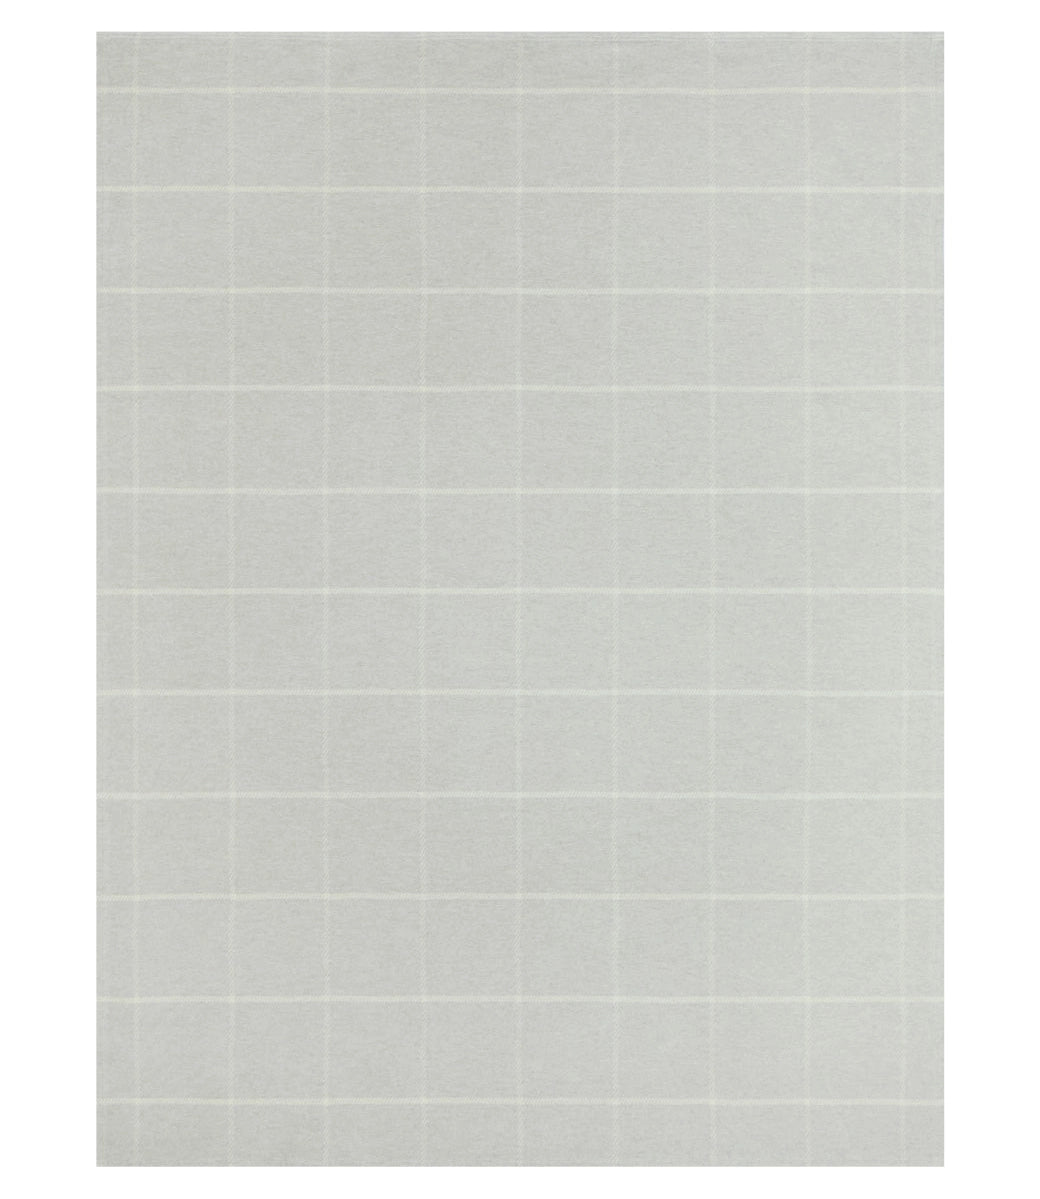 ChappyWrap Lightweight Blanket- Windowpane Light Grey